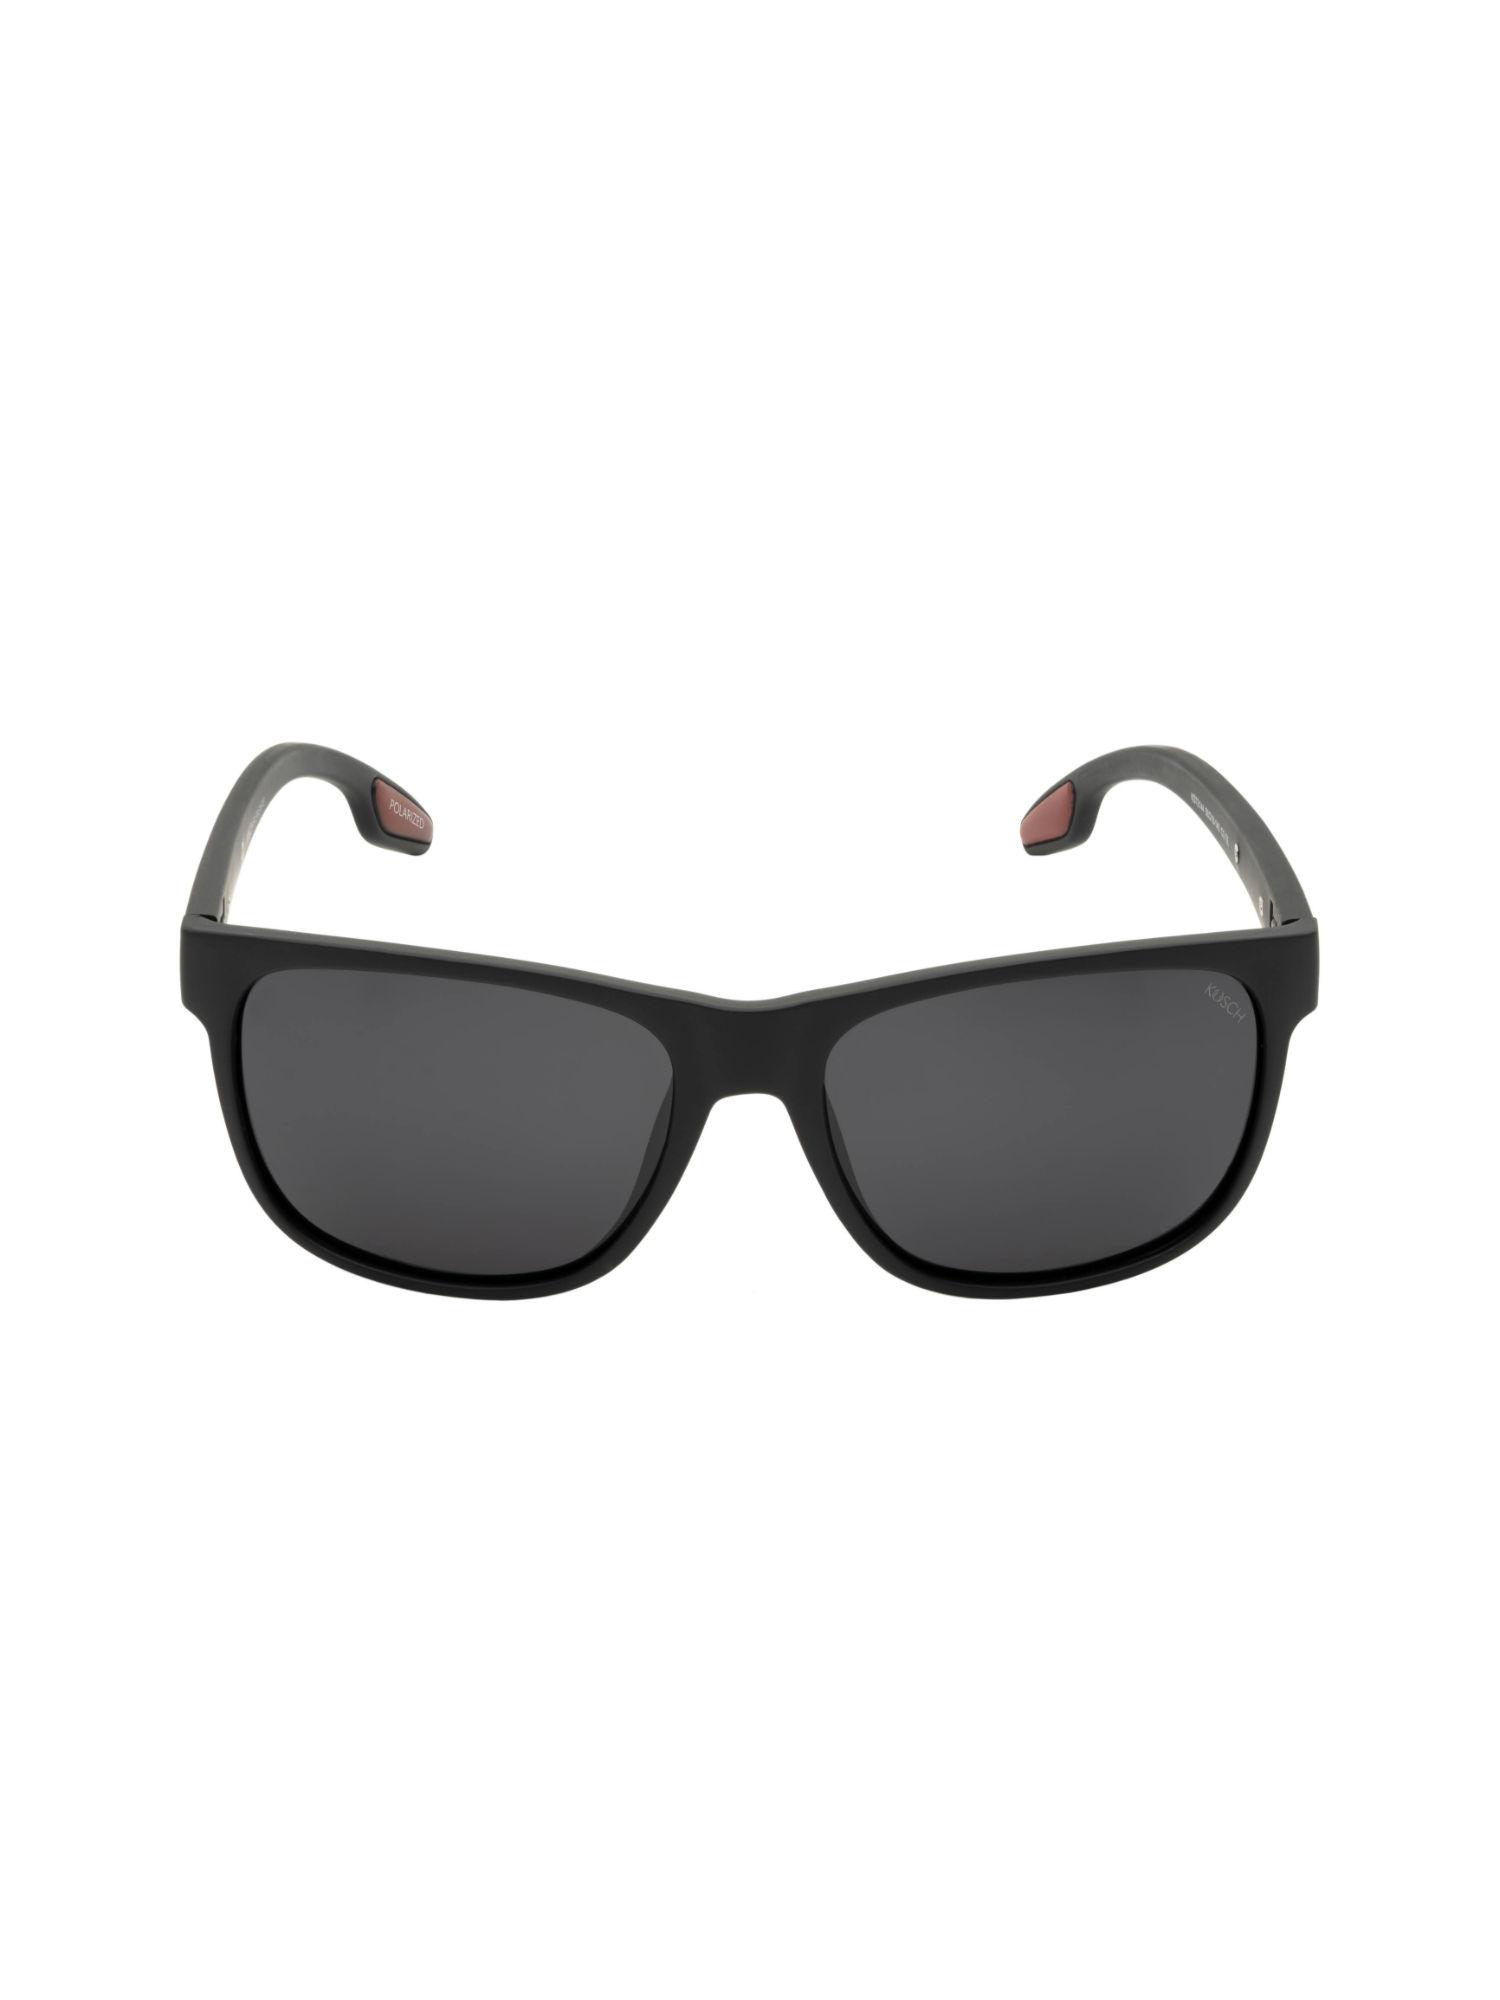 men black grey wayfarer shape sunglasses with polarised lenses